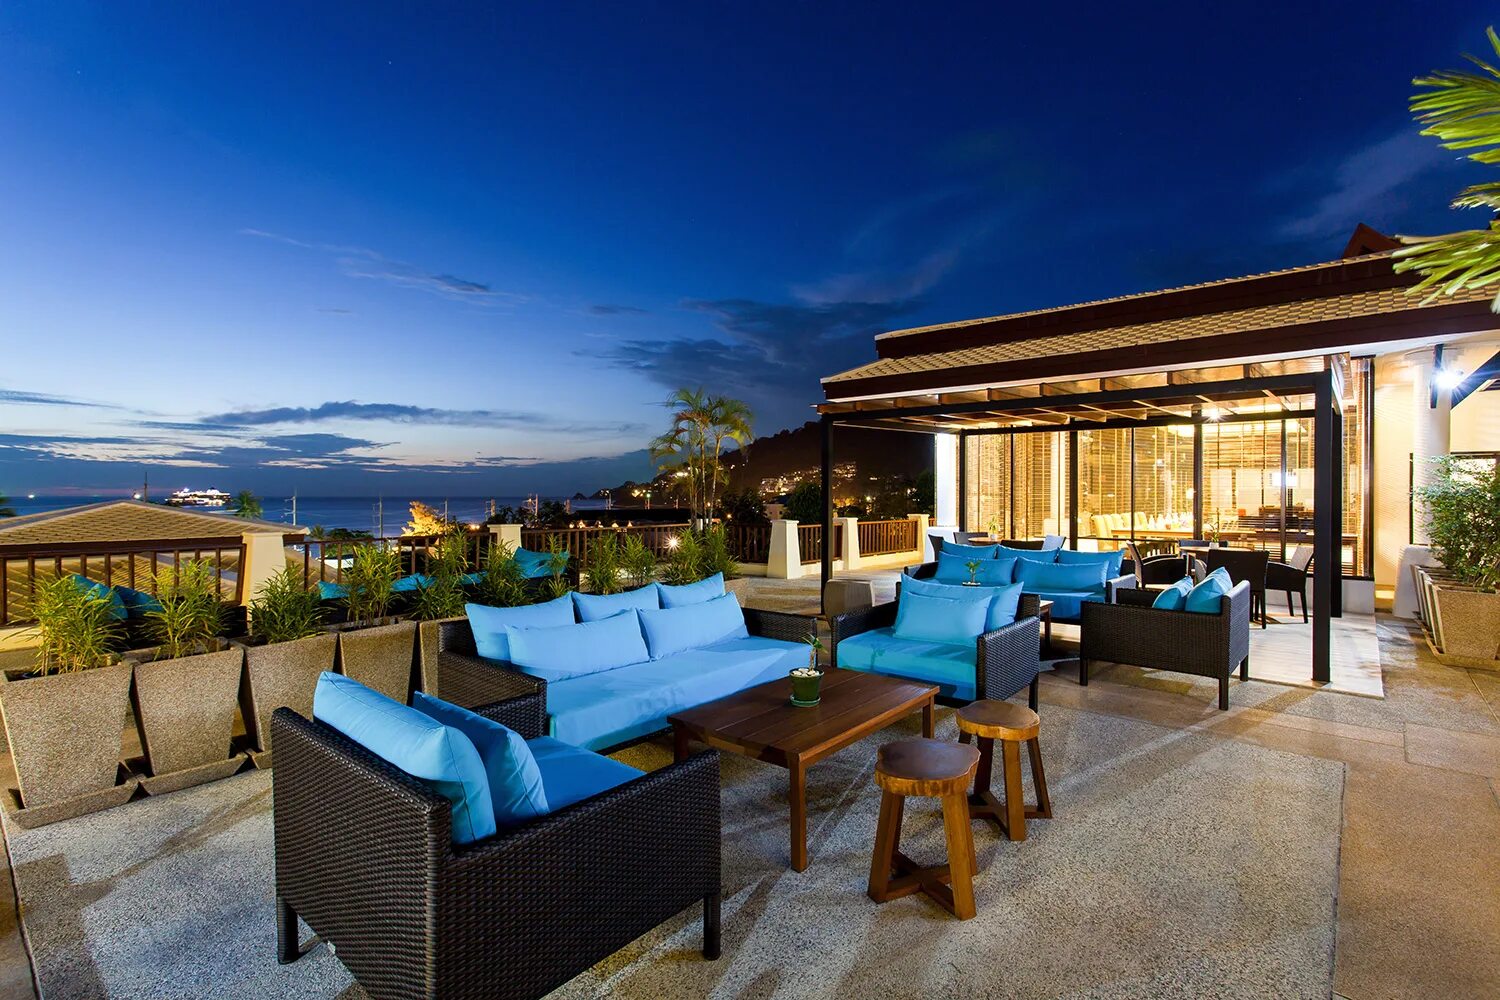 Andamantra Resort Villa Phuket 4. The Blue Marine Resort Spa 4 Пхукет. Centara Blue Marine Resort & Spa Phuket) 4*. Andamantra Resort & Pool Villa (ex. Centara Blue Marine Resort & Spa) 4* (Патонг).